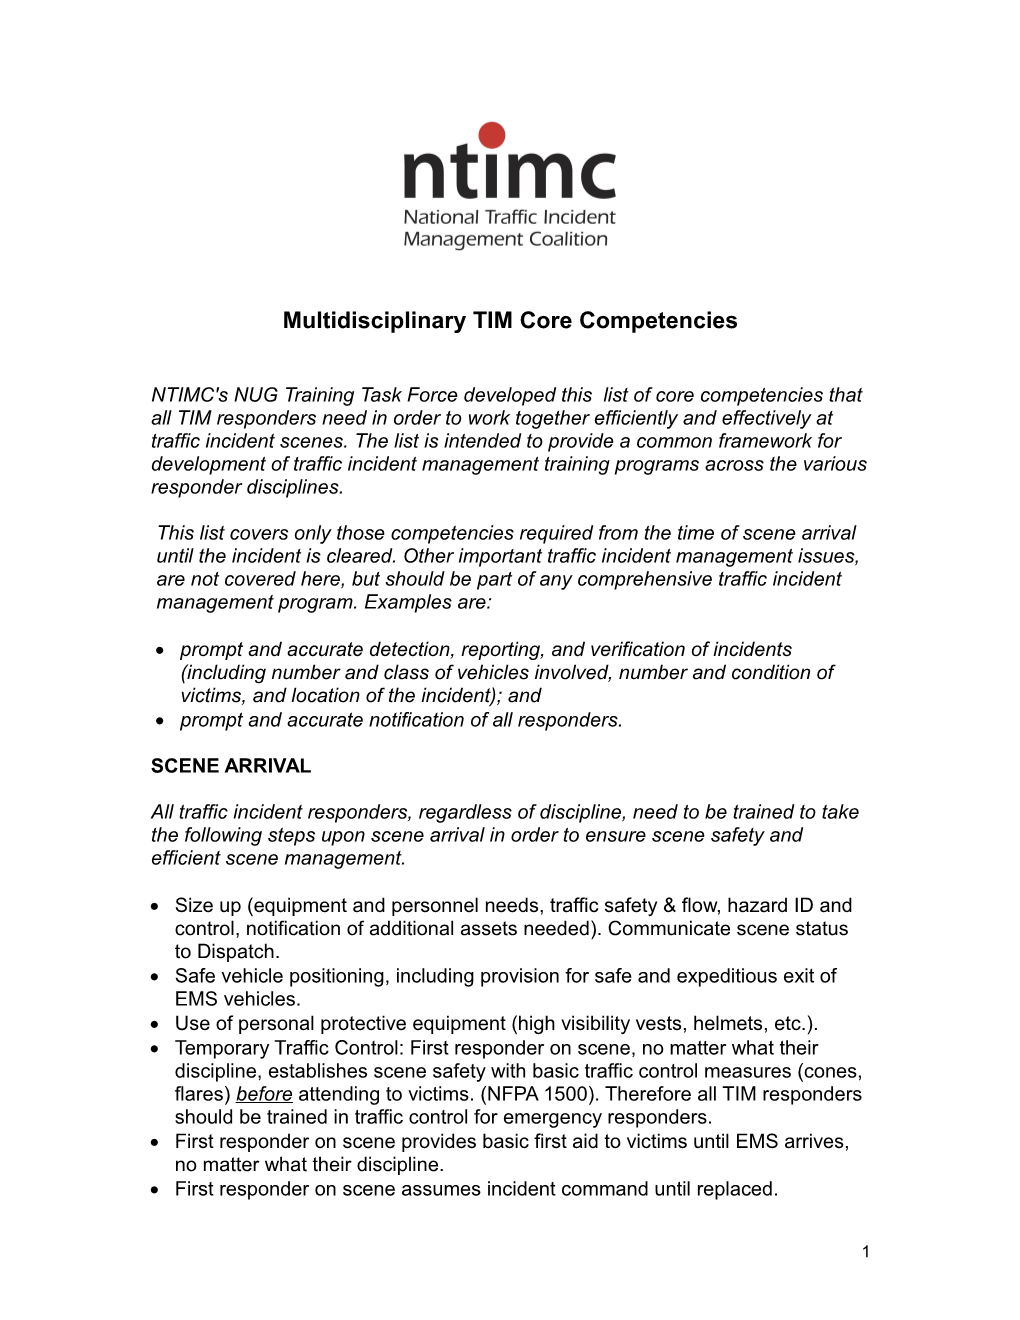 Multidisciplinary Core Competencies